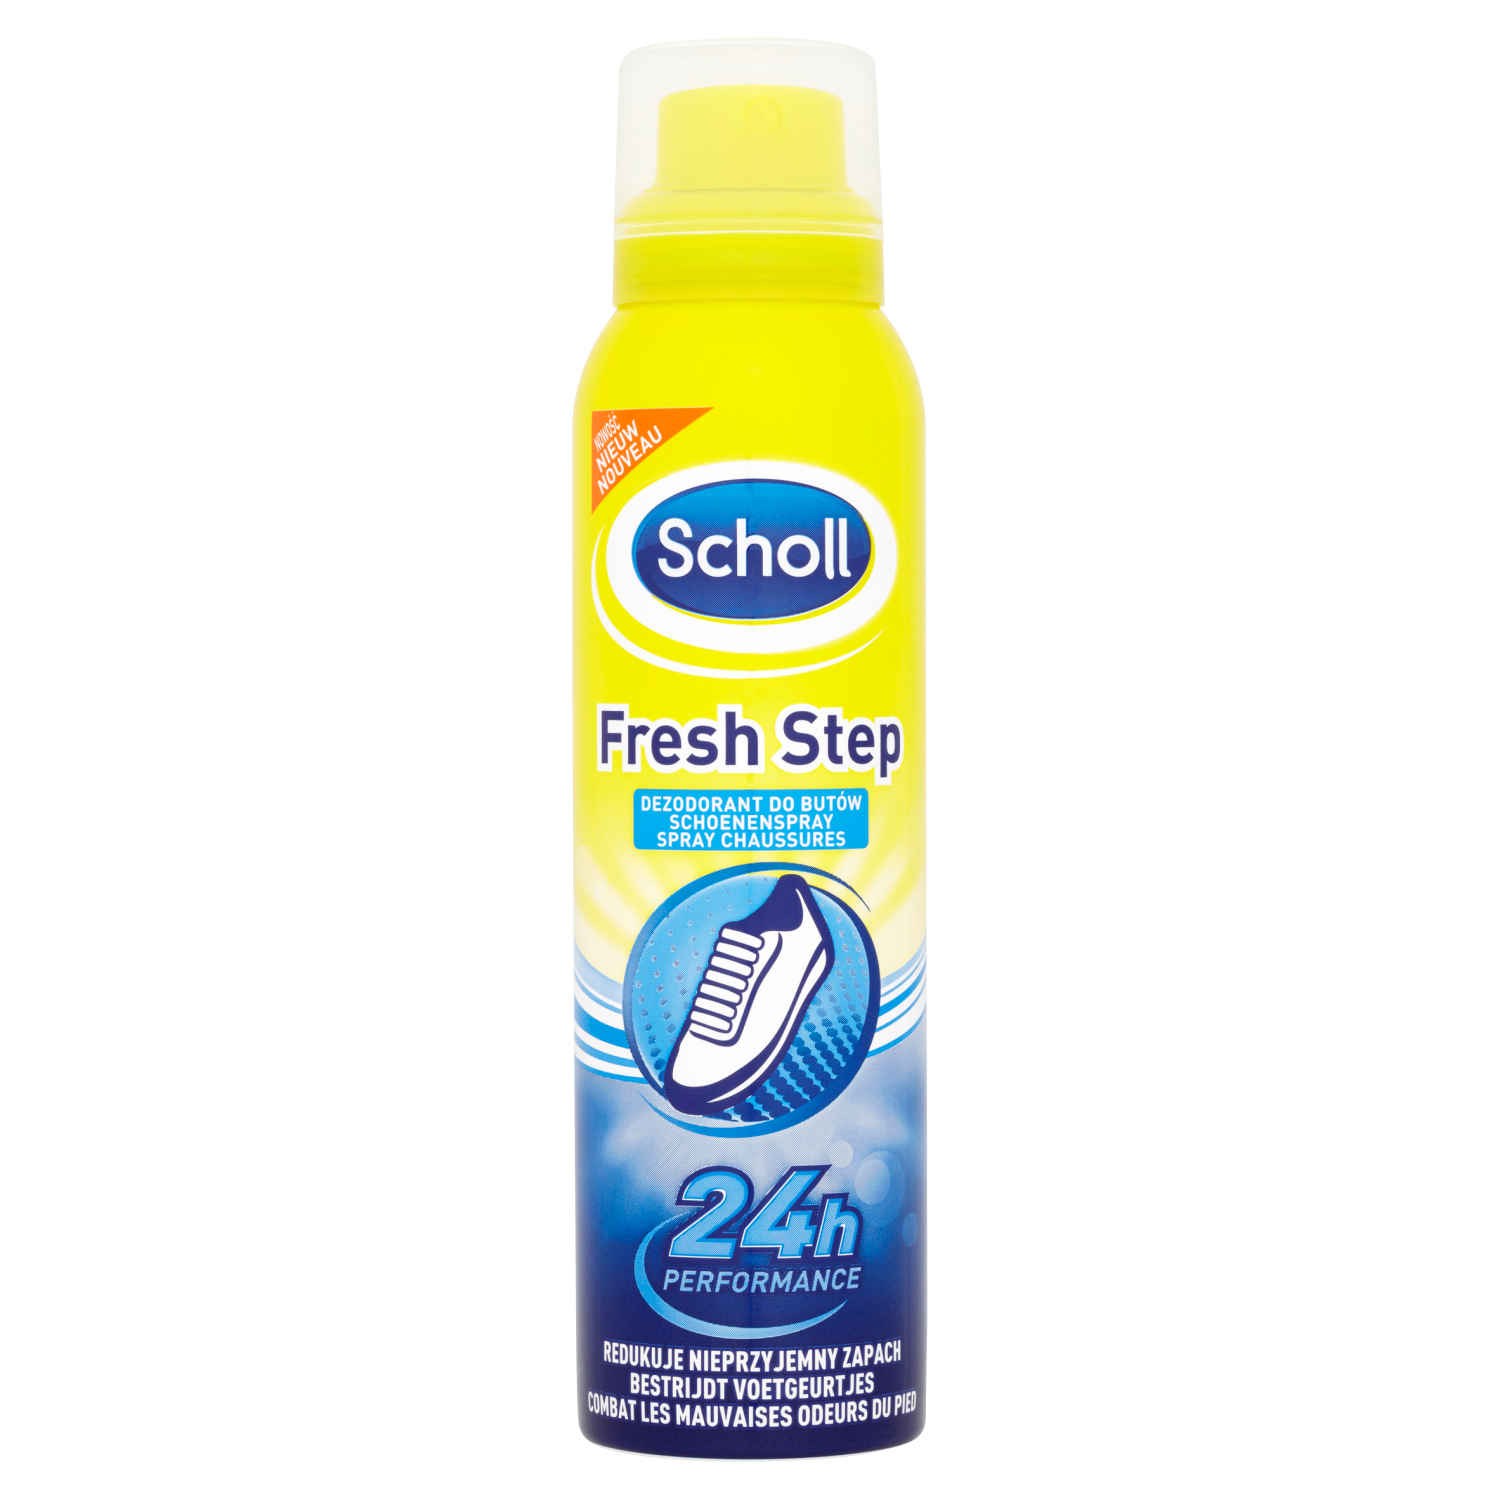 Scholl Fresh Step дезодорант для обуви уменьшающий неприятный запах, 150 мл